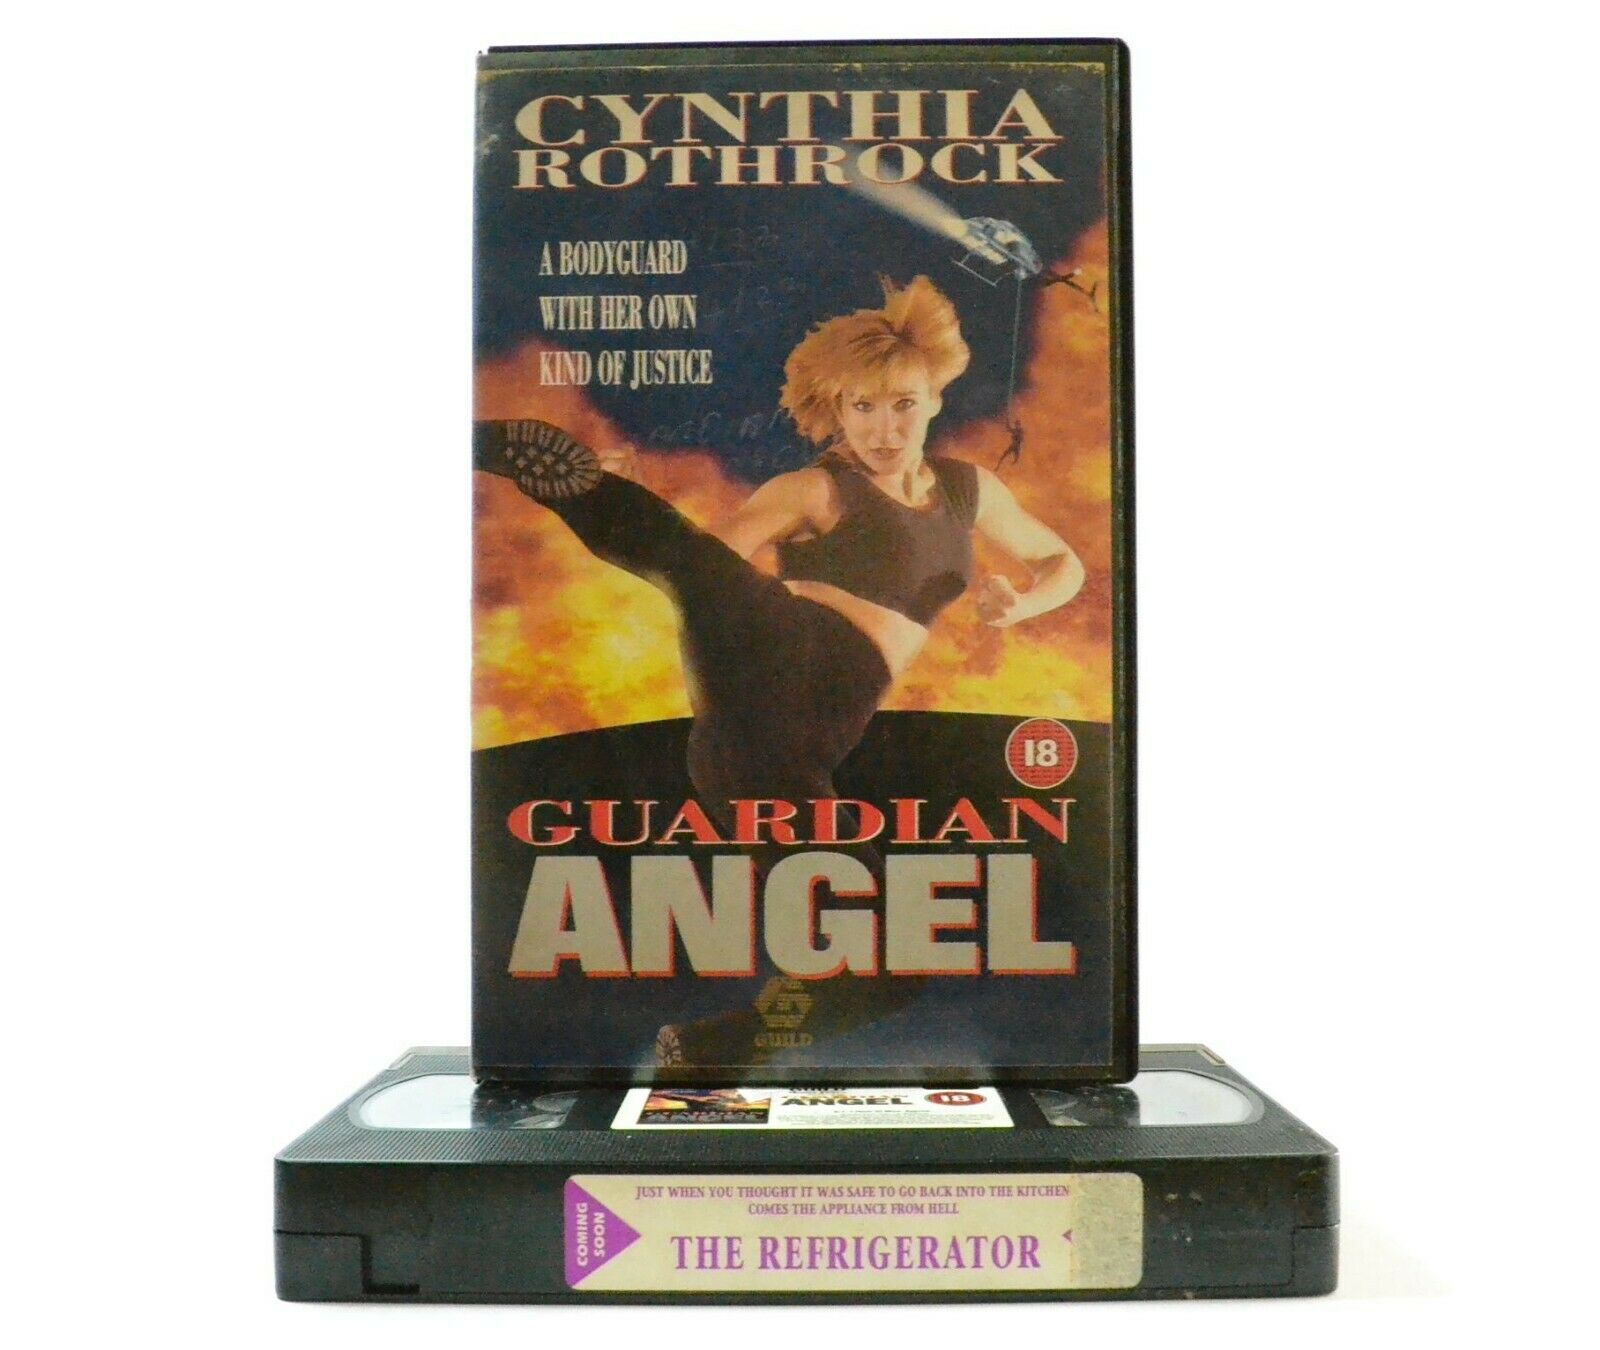 Guardian Angel: Guild Home (1994) - Large Box - Martial Arts - C.Rothrock - VHS-